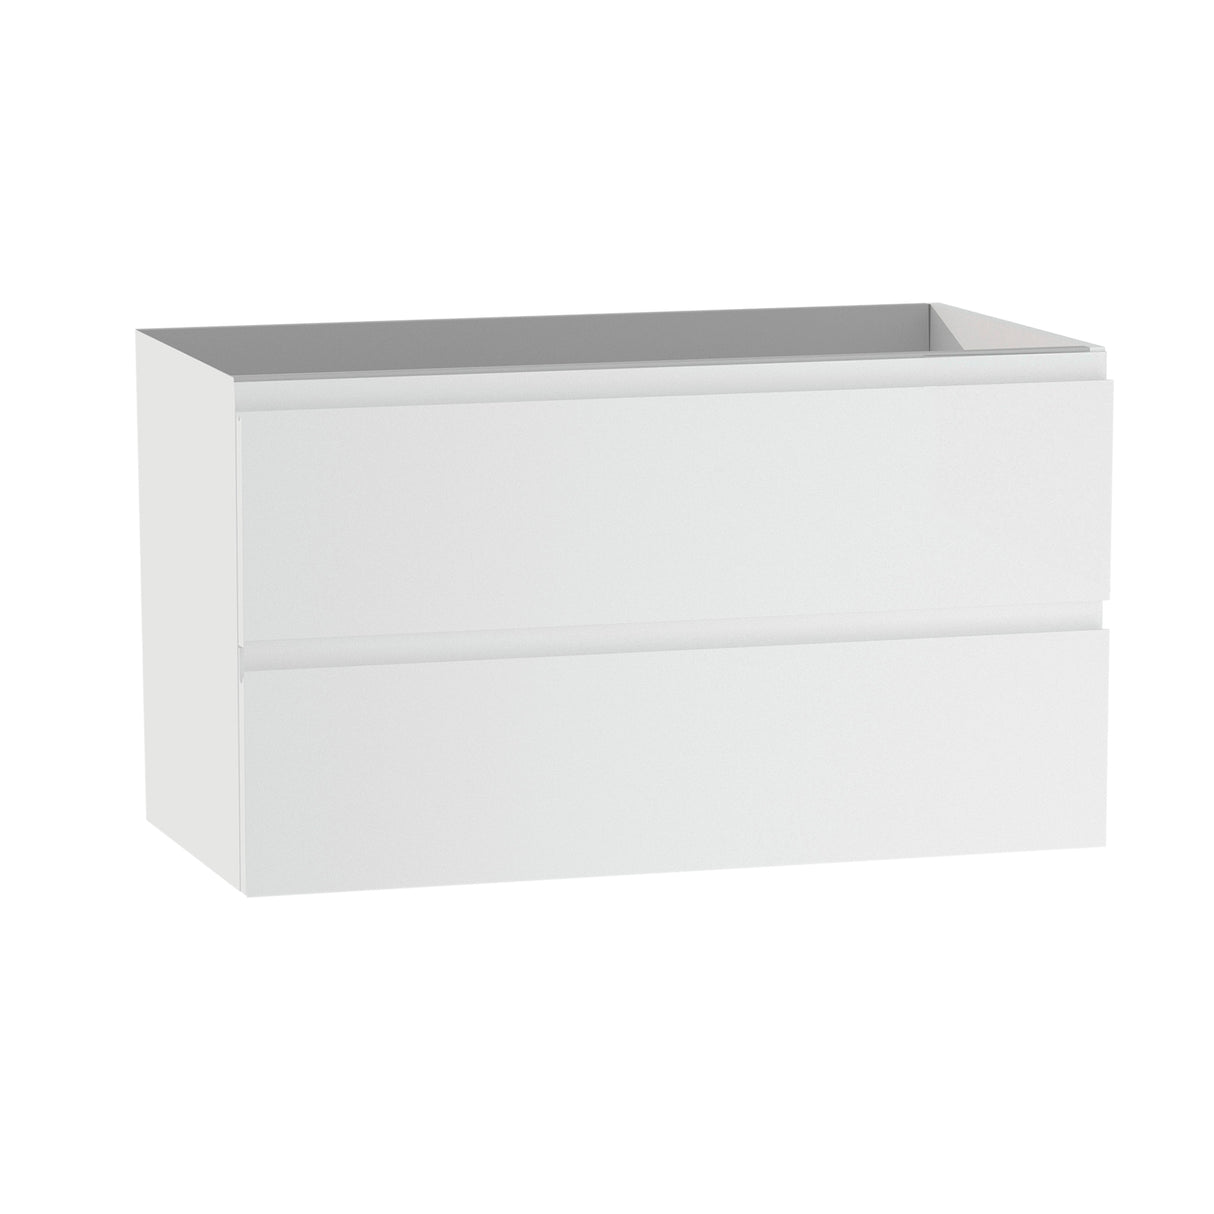 DAX Pasadena Single Vanity Cabinet with Onix Basin, 32", Matte White DAX-PAS013227-ONX